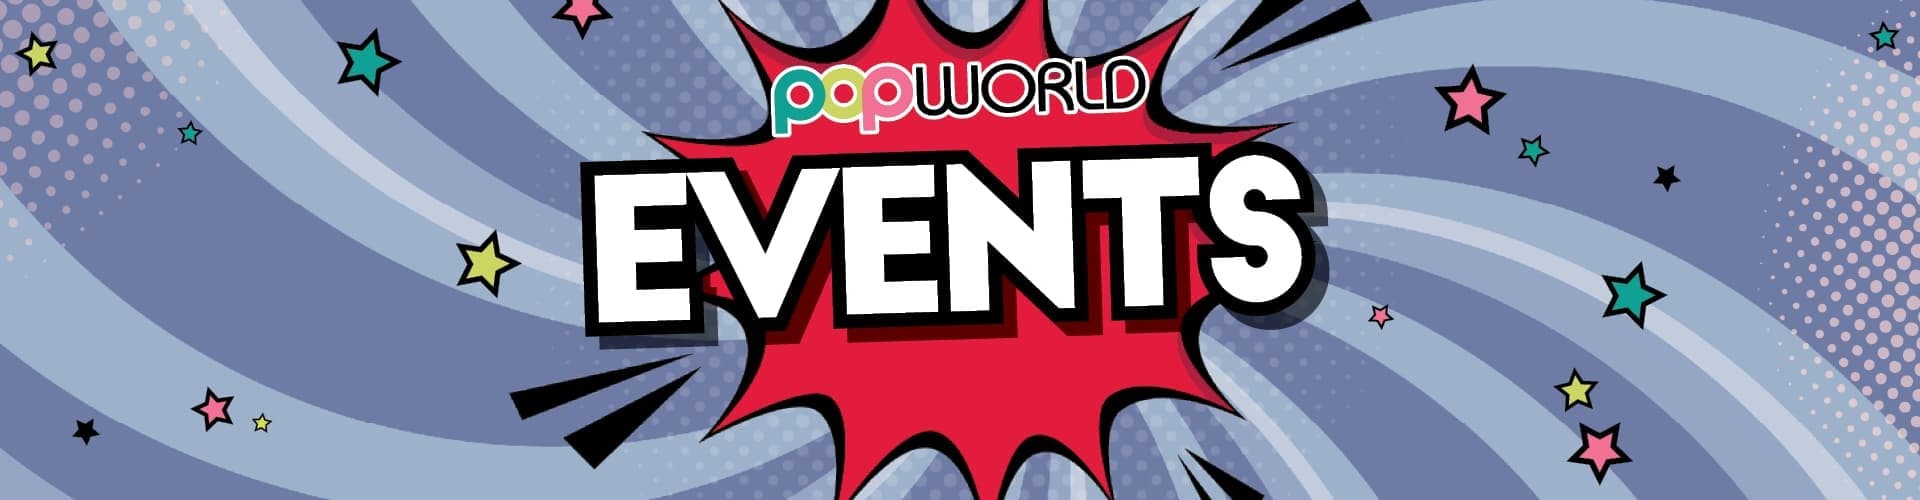 Events at Popworld Birmingham